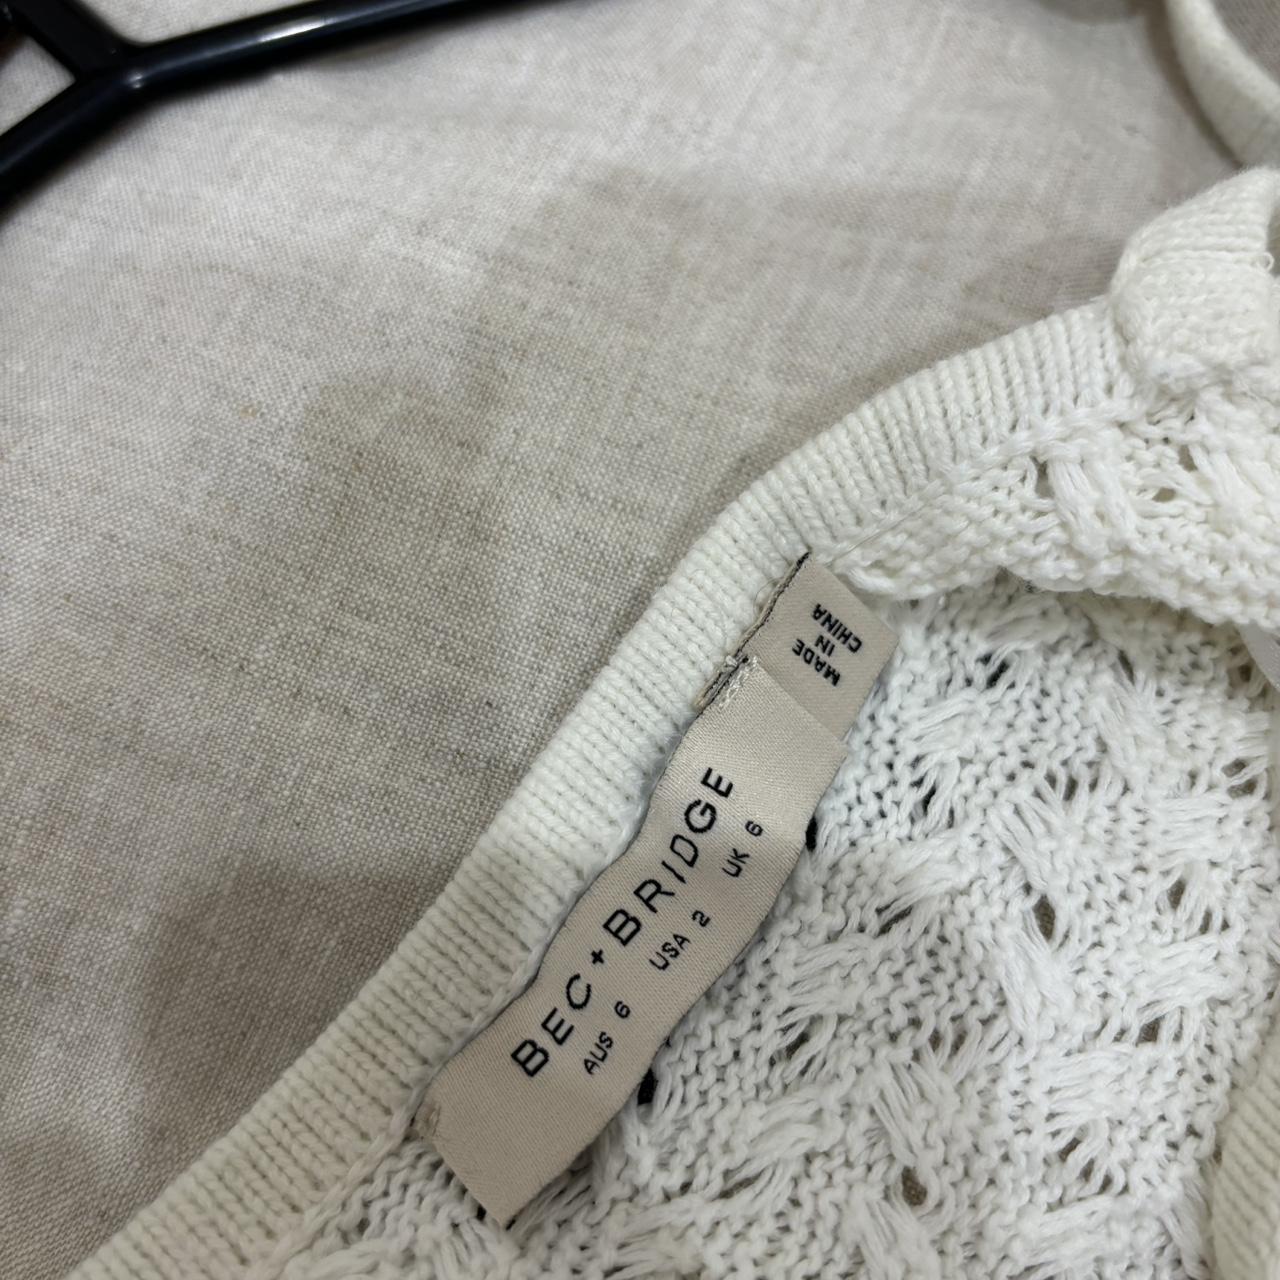 Bec & Bridge Effie Knit White dress 🤍 stain at the... - Depop